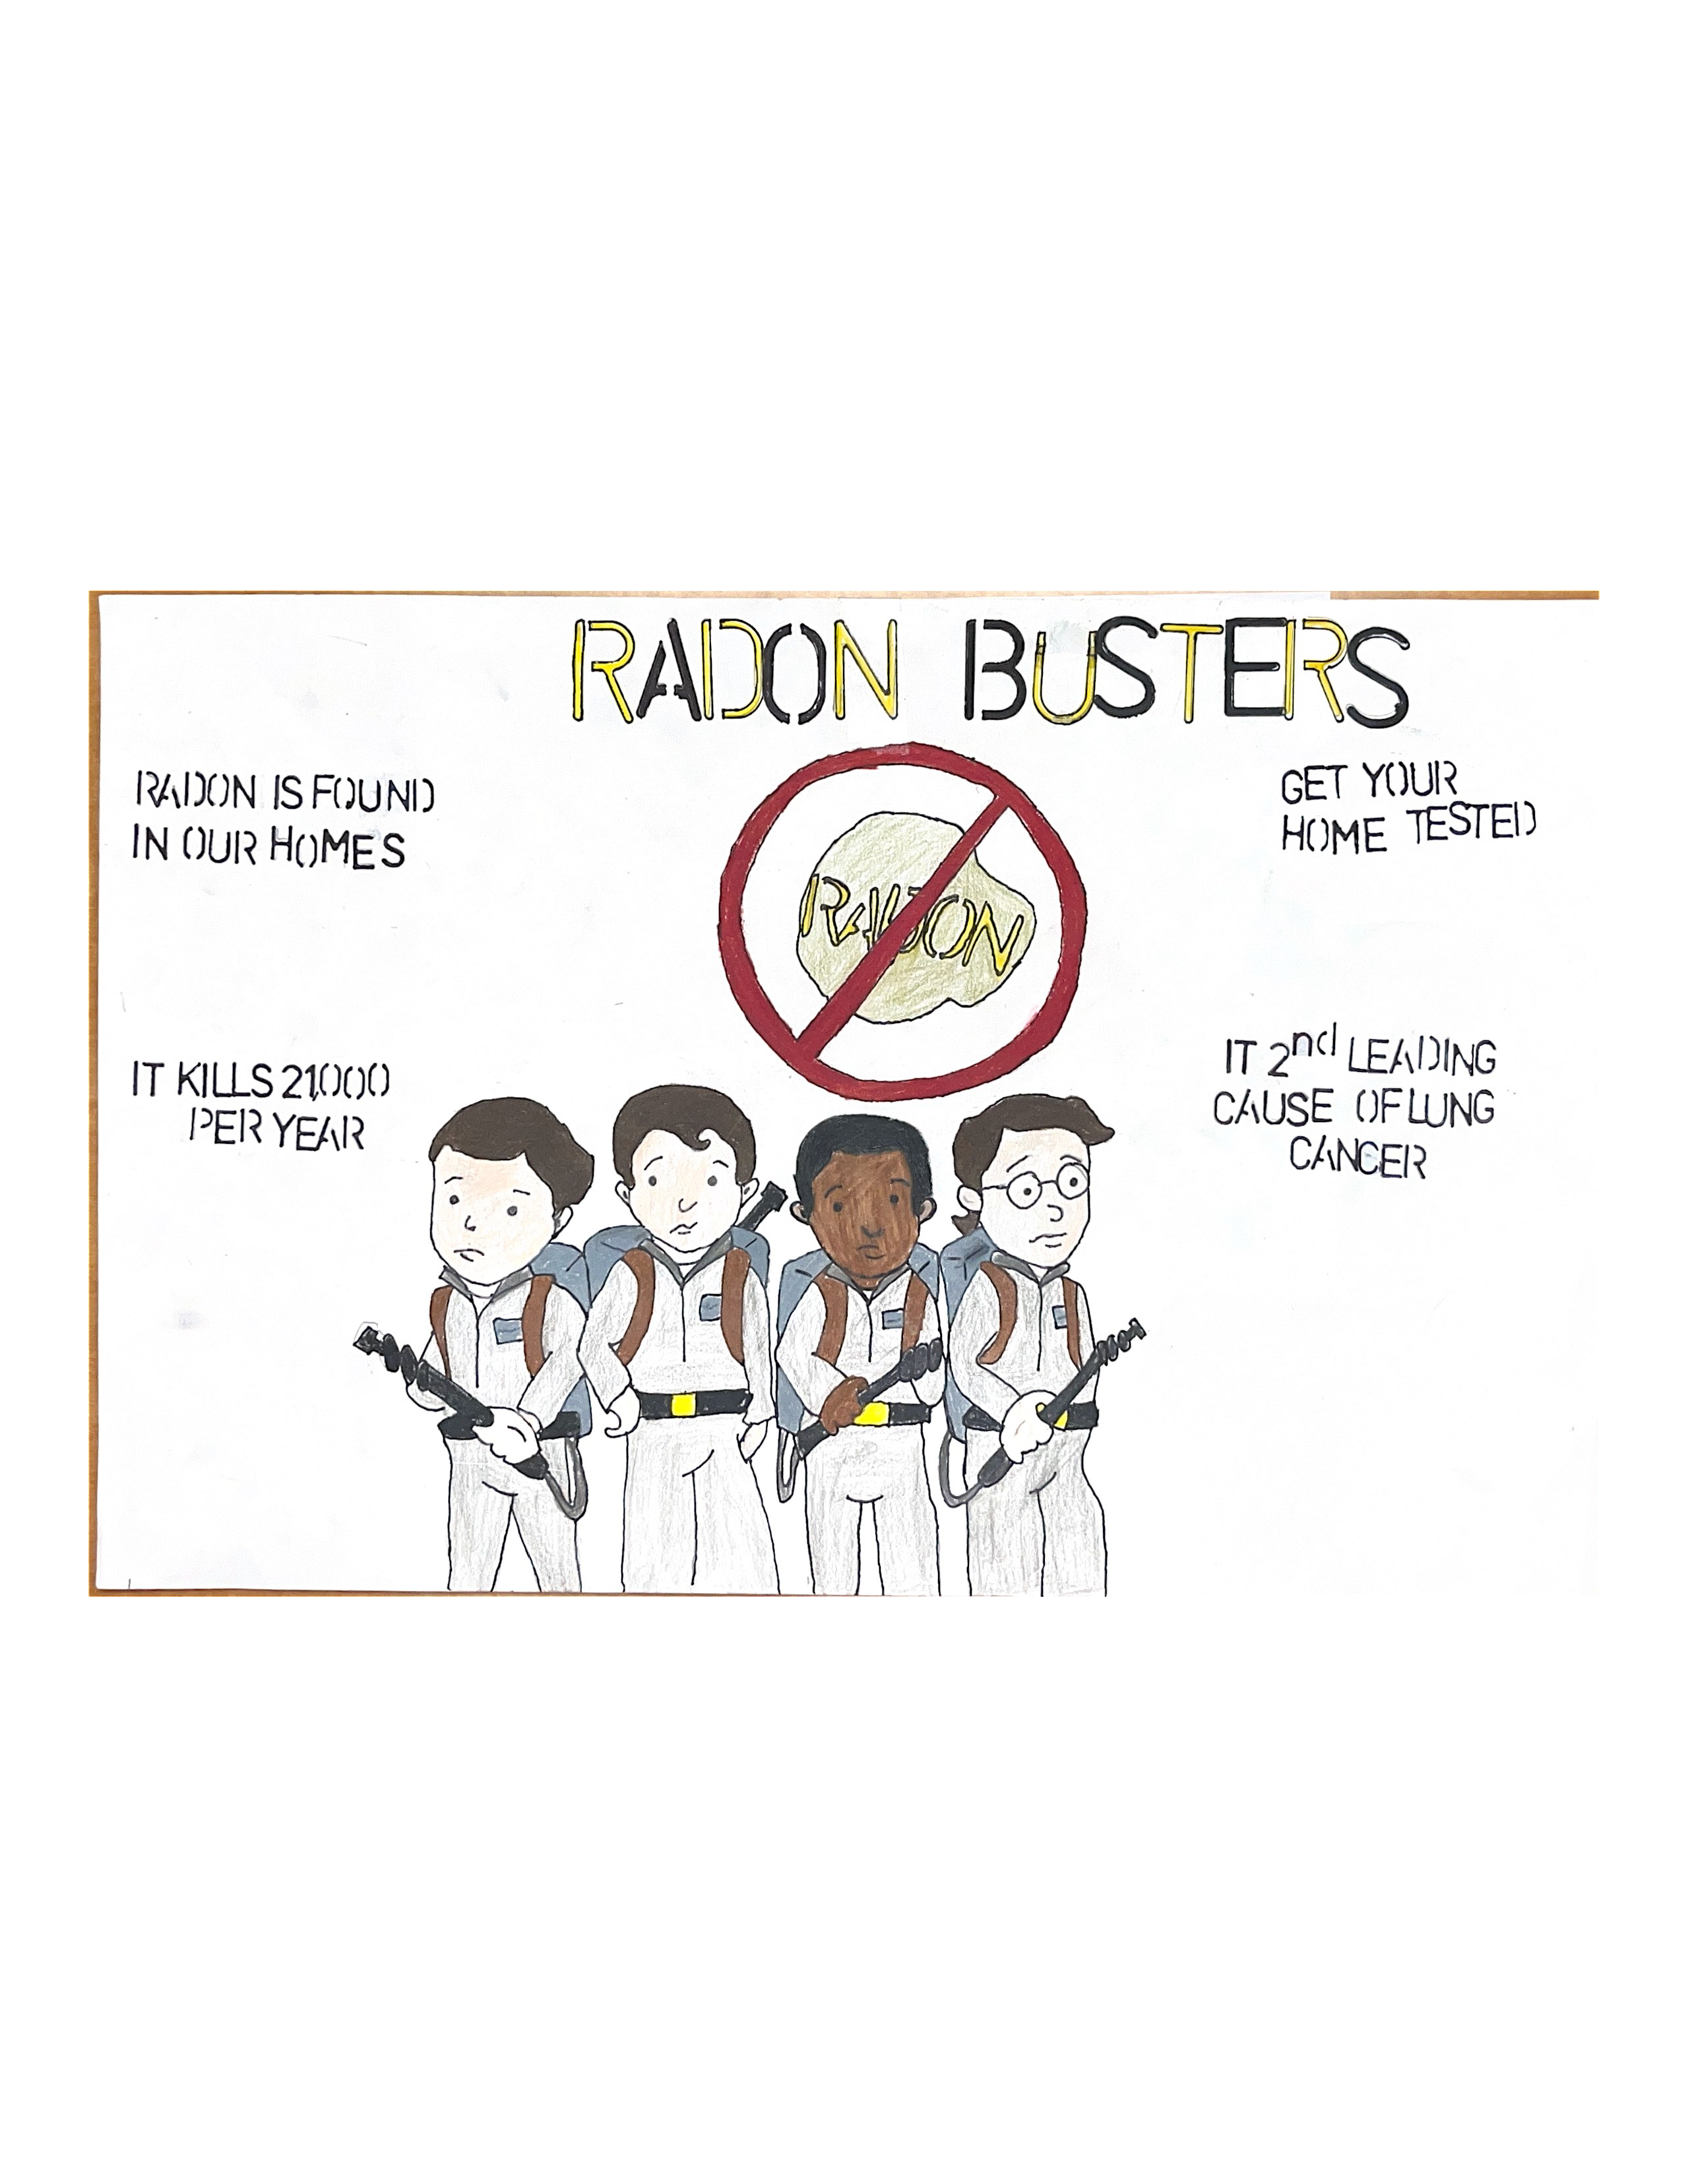 radon contest poster